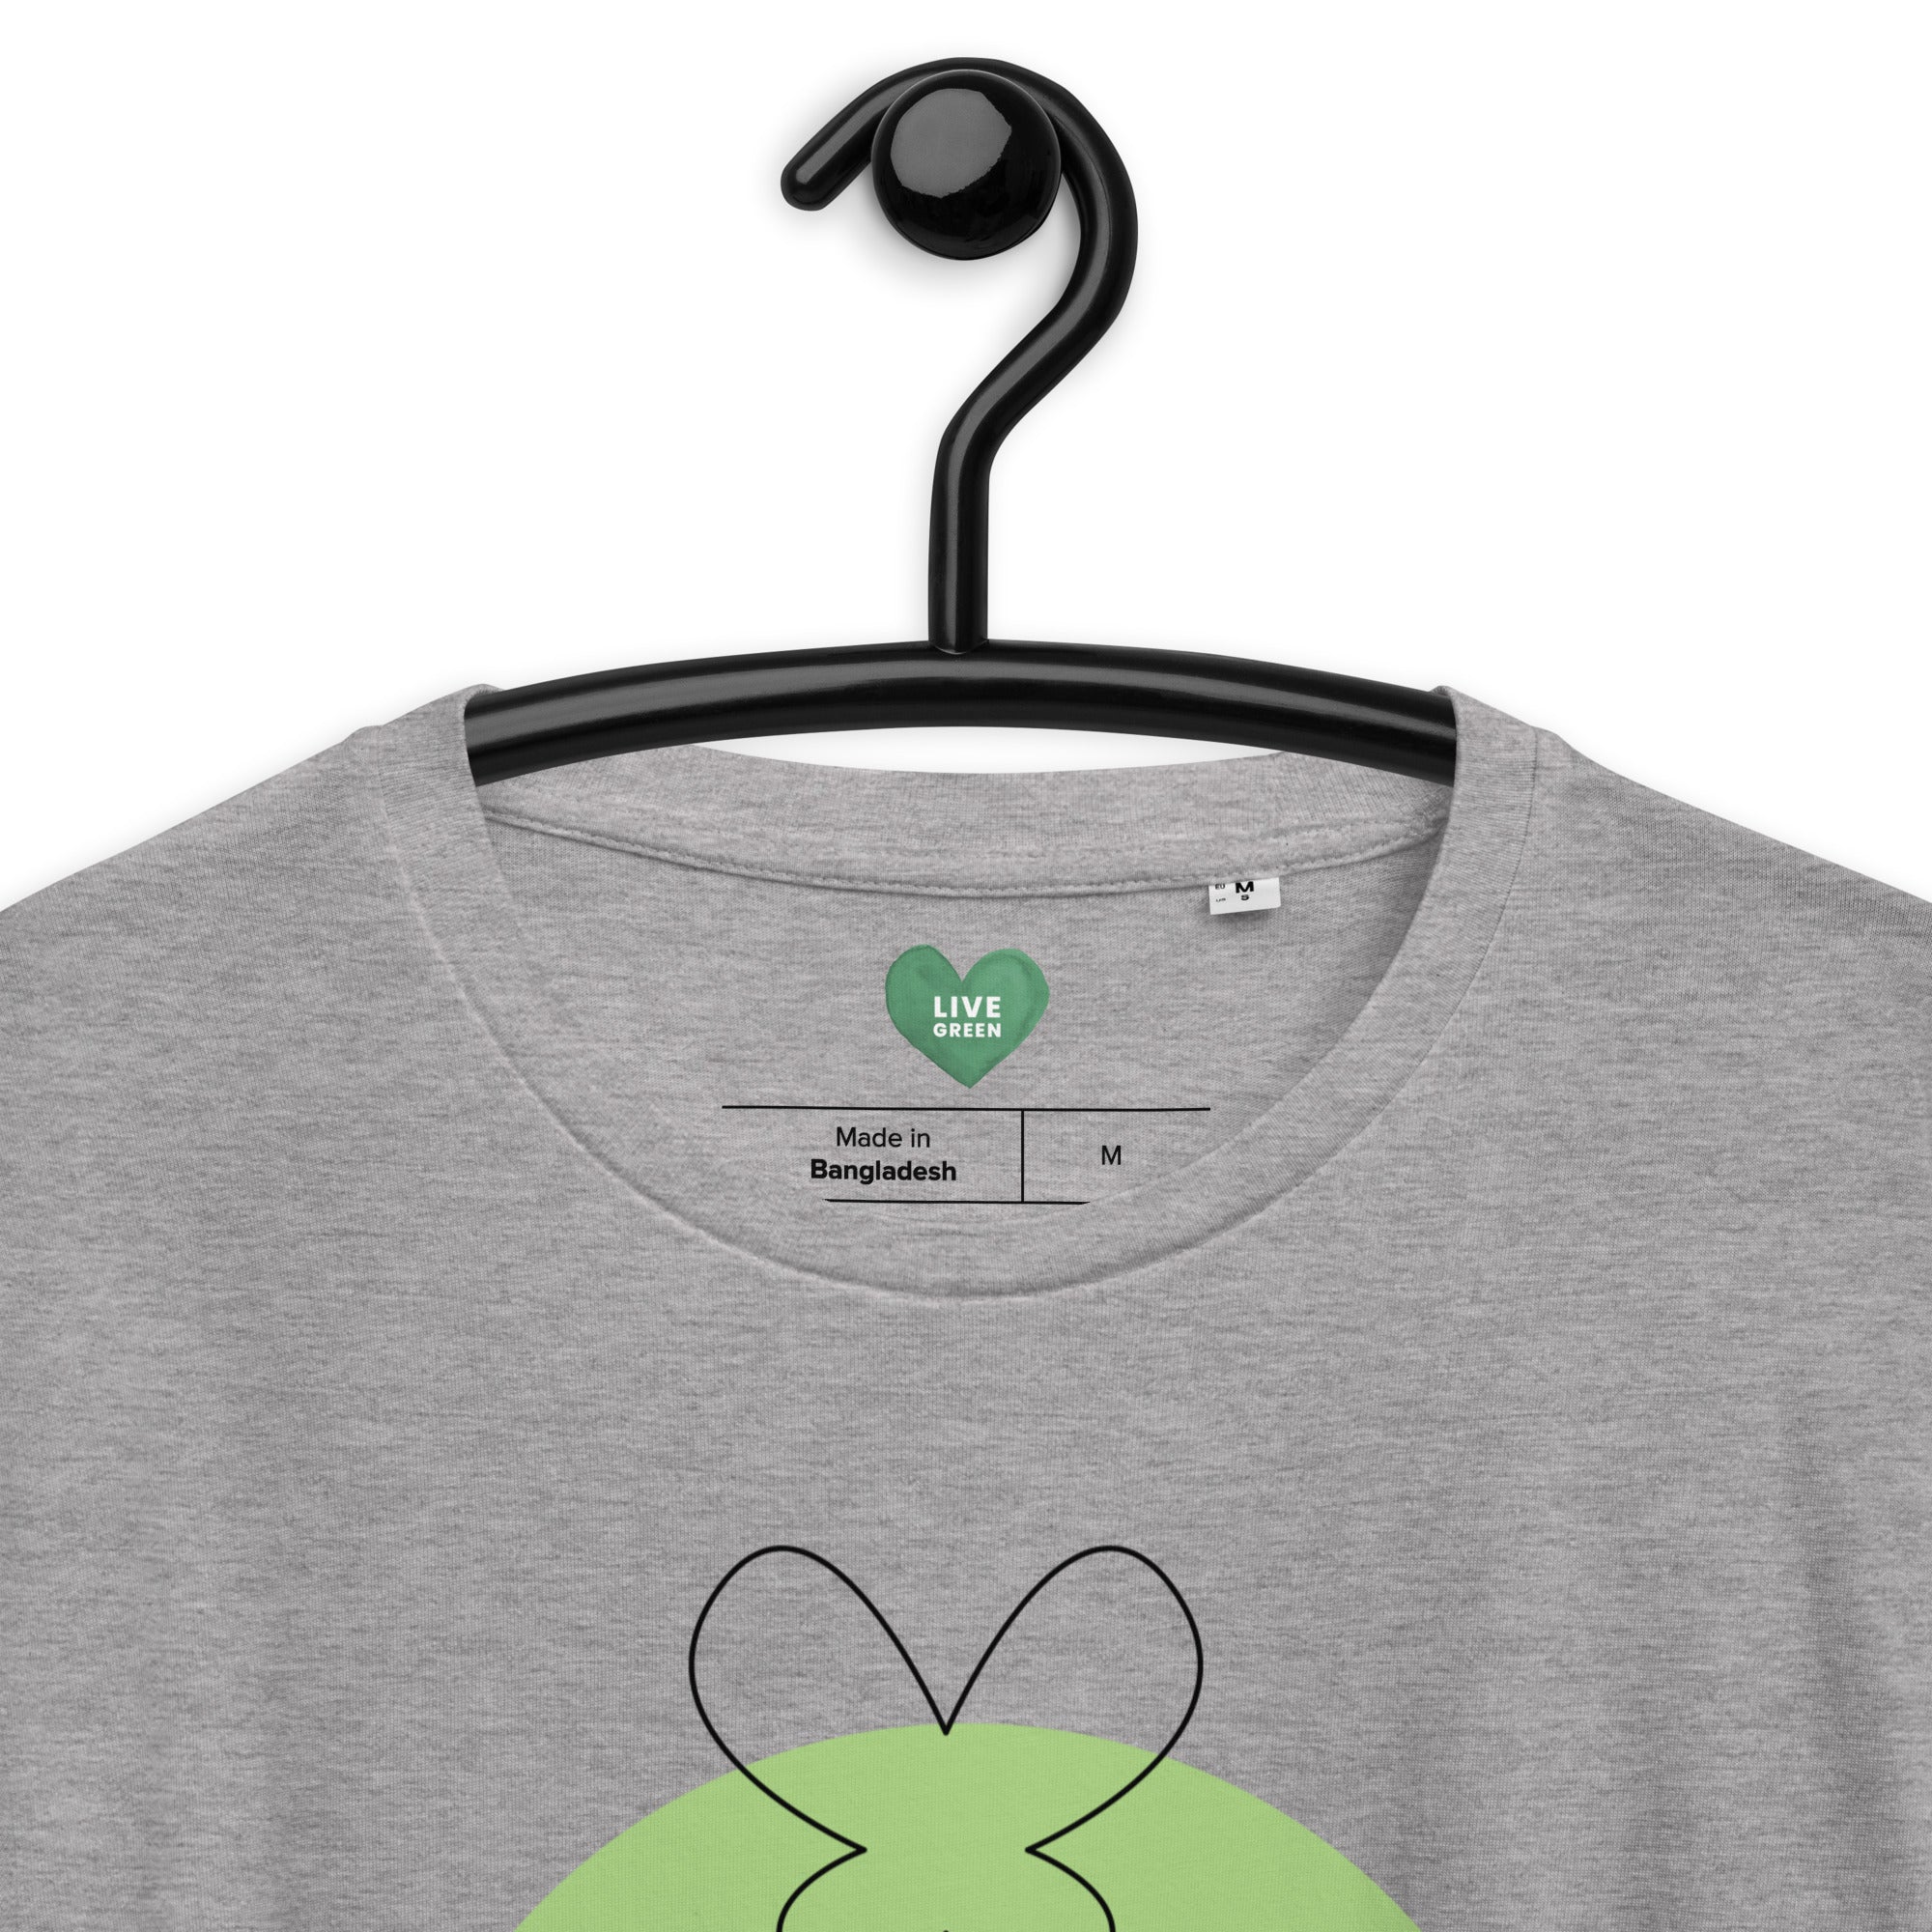 Eco-Friendly Unisex Organic Cotton T-Shirt